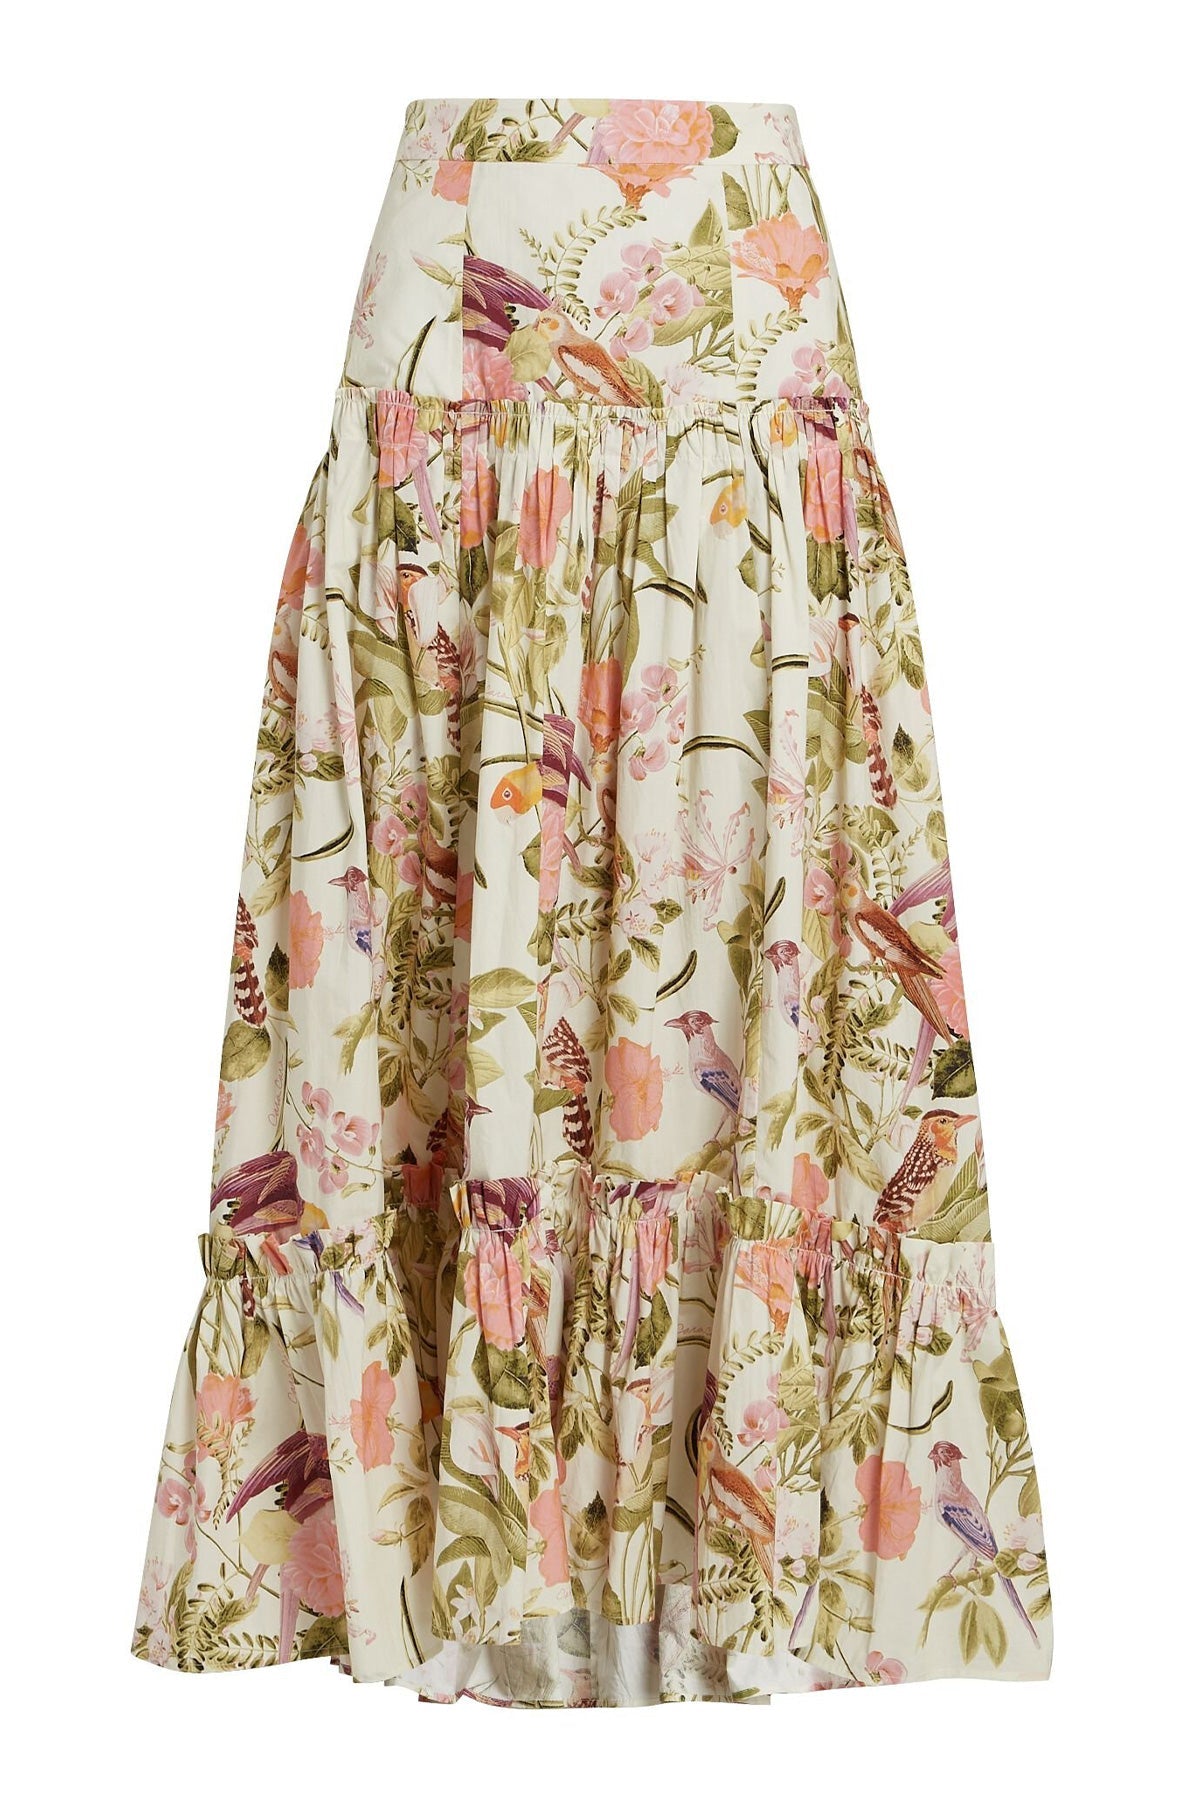 Tisbury Skirt in Tropical Birds Ivory - shop-olivia.com